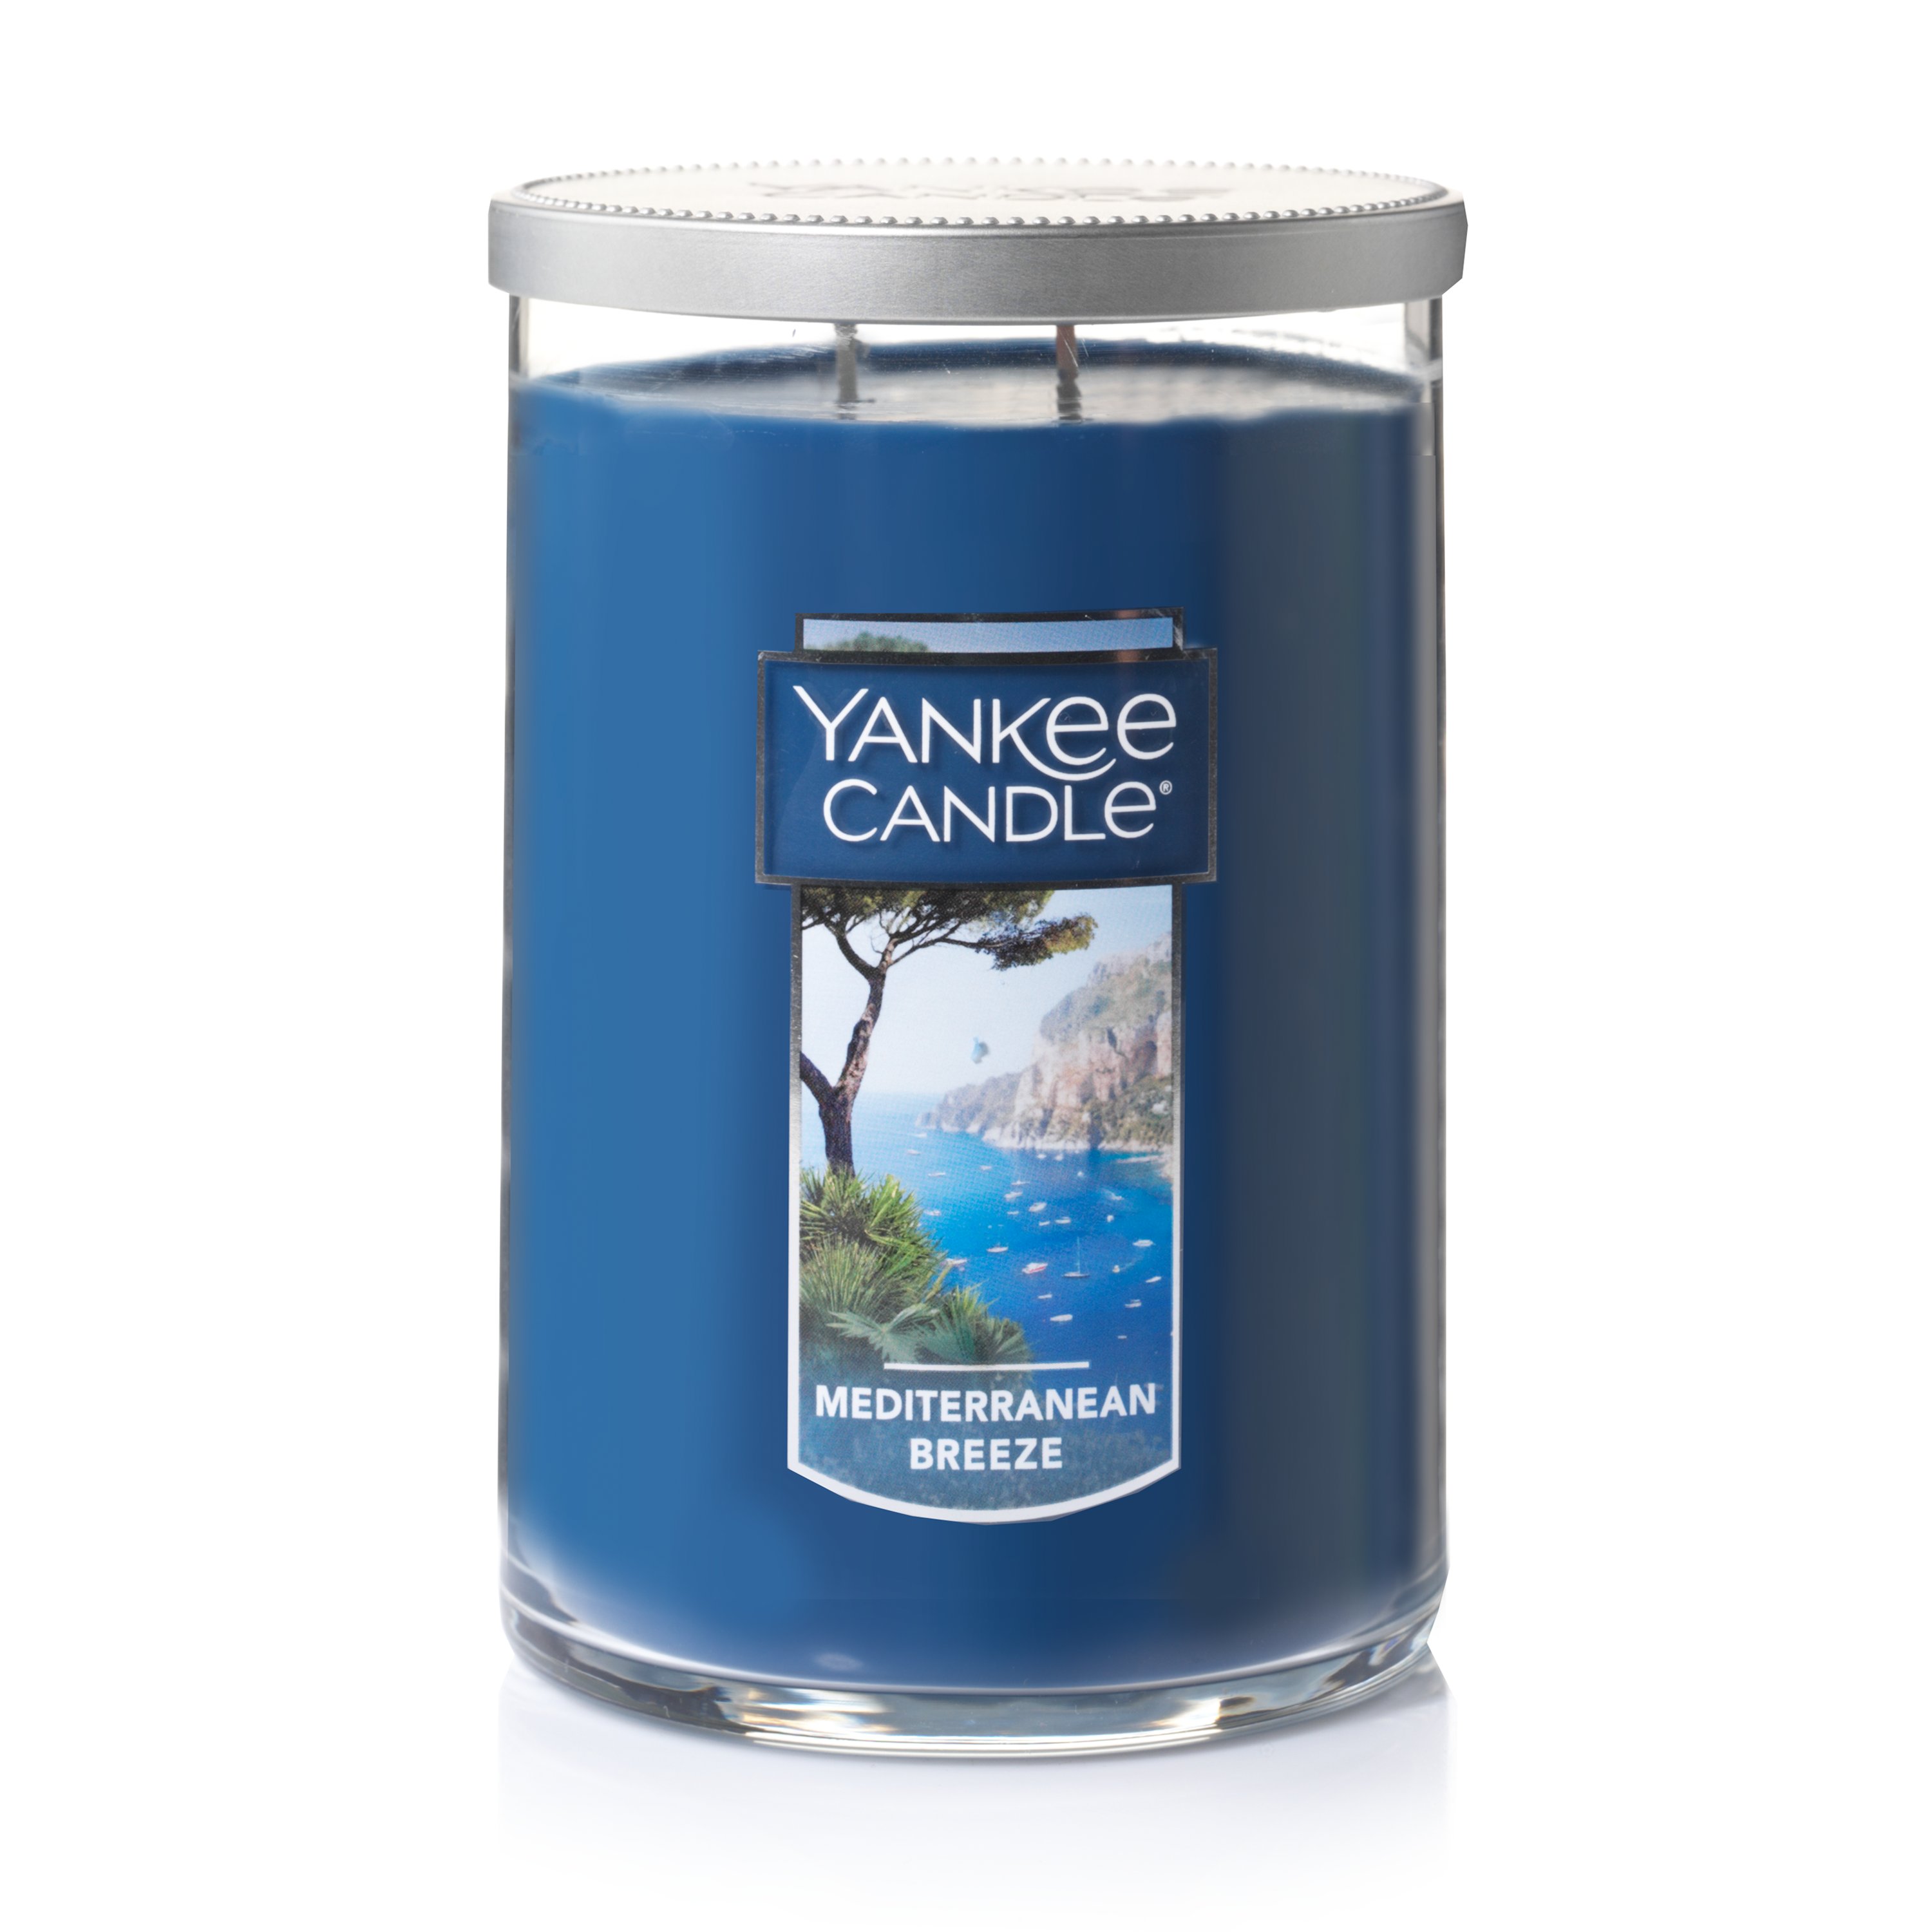 Yankee Candle USA Limited Edition Mediterranean Breeze Car Jar 